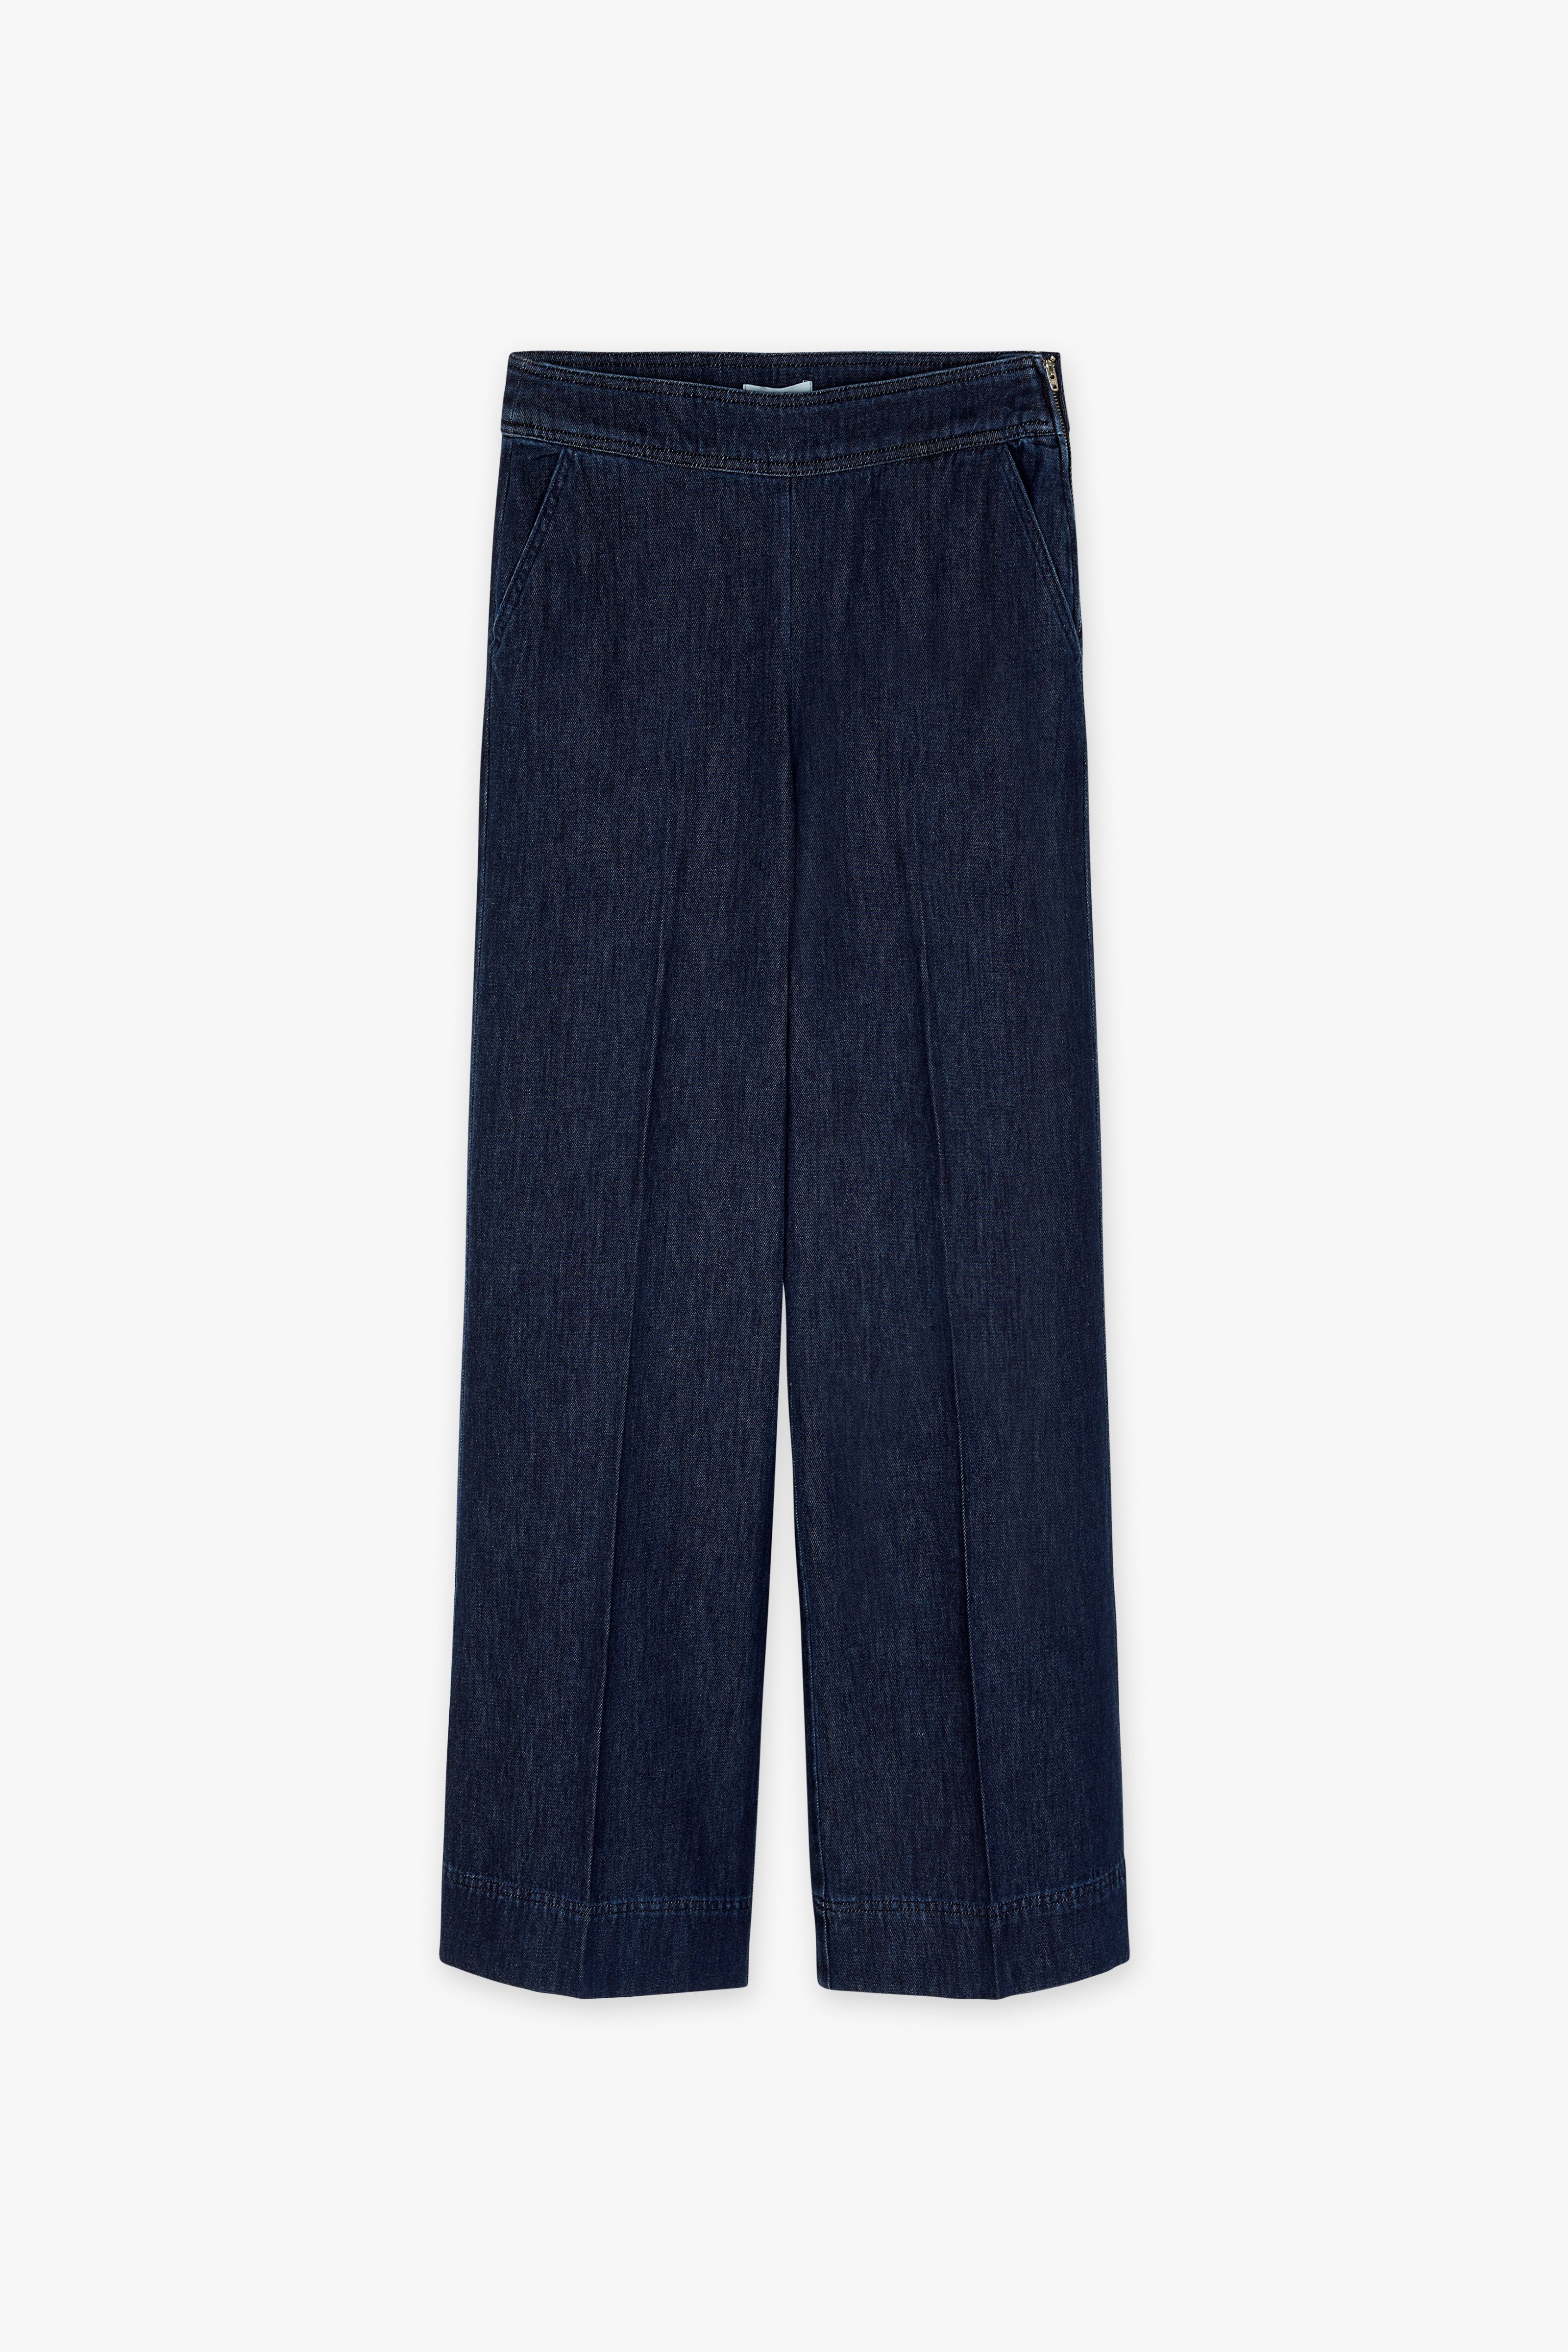 CKS Dames - TAIFOS - lange jeans - donkerblauw